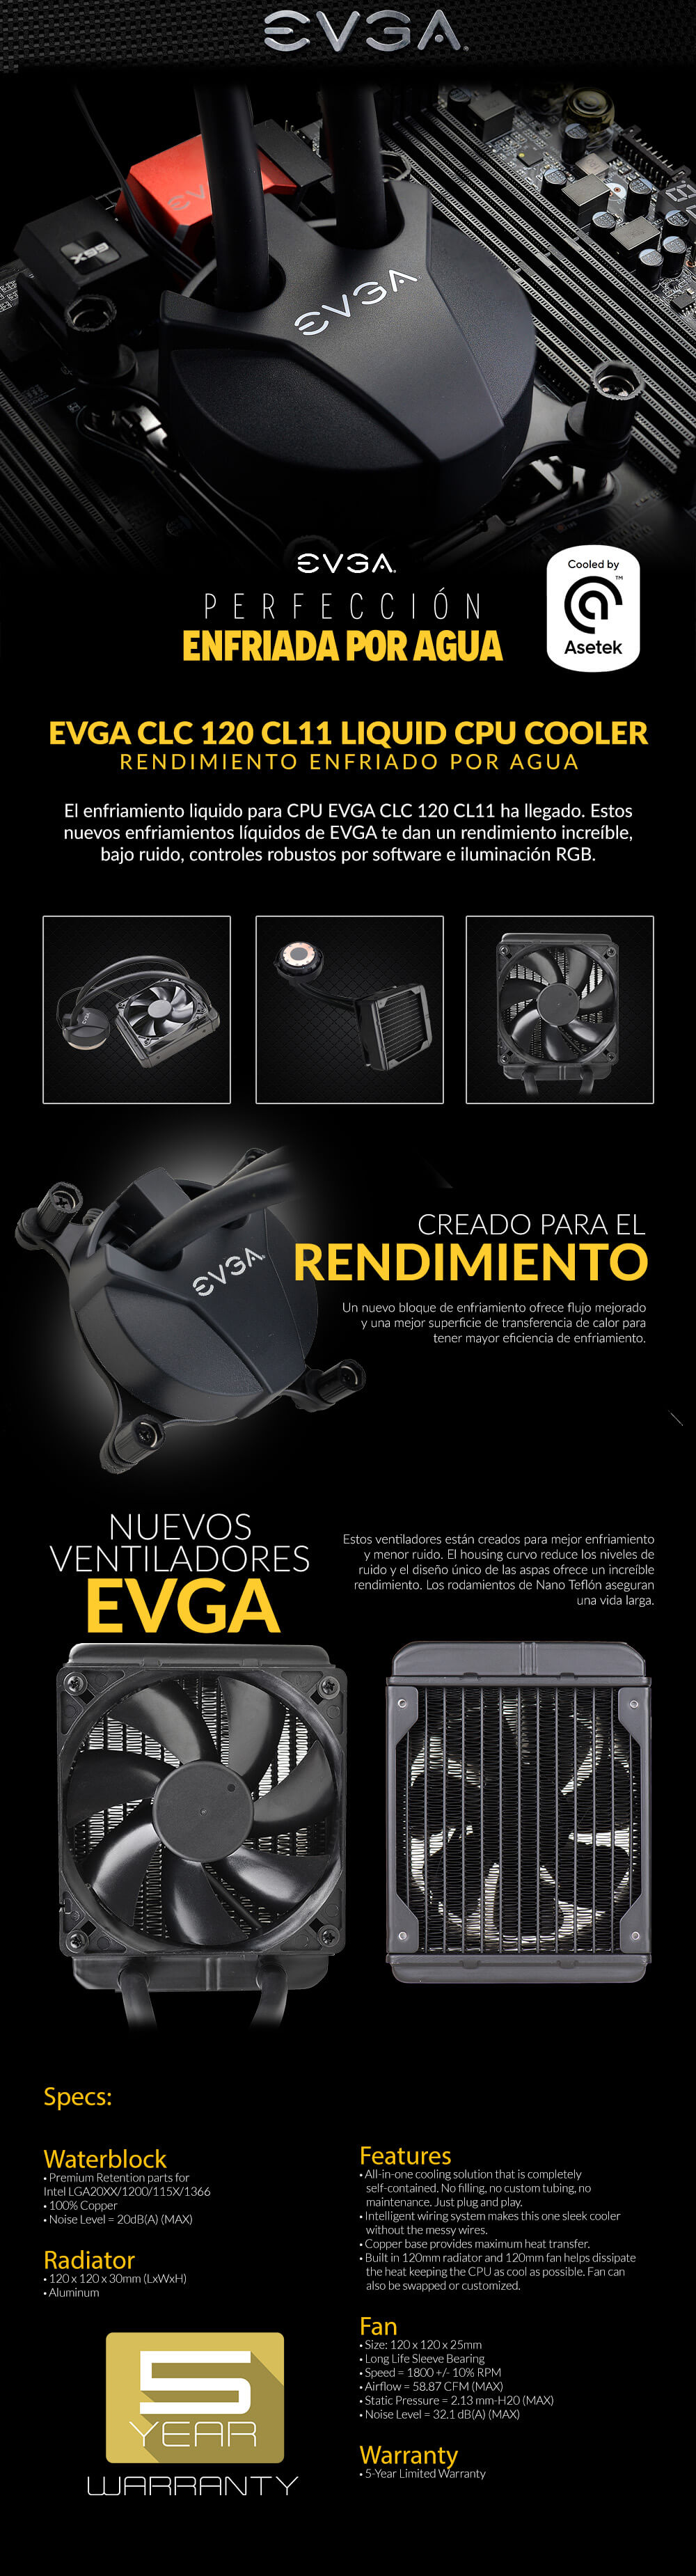 Evga Latam Productos Evga Clc 1mm All In One Cpu Liquid Cooler 1x 1mm Fan Intel 5 Yr Warranty 400 Hy Cl11 V1 400 Hy Cl11 V1